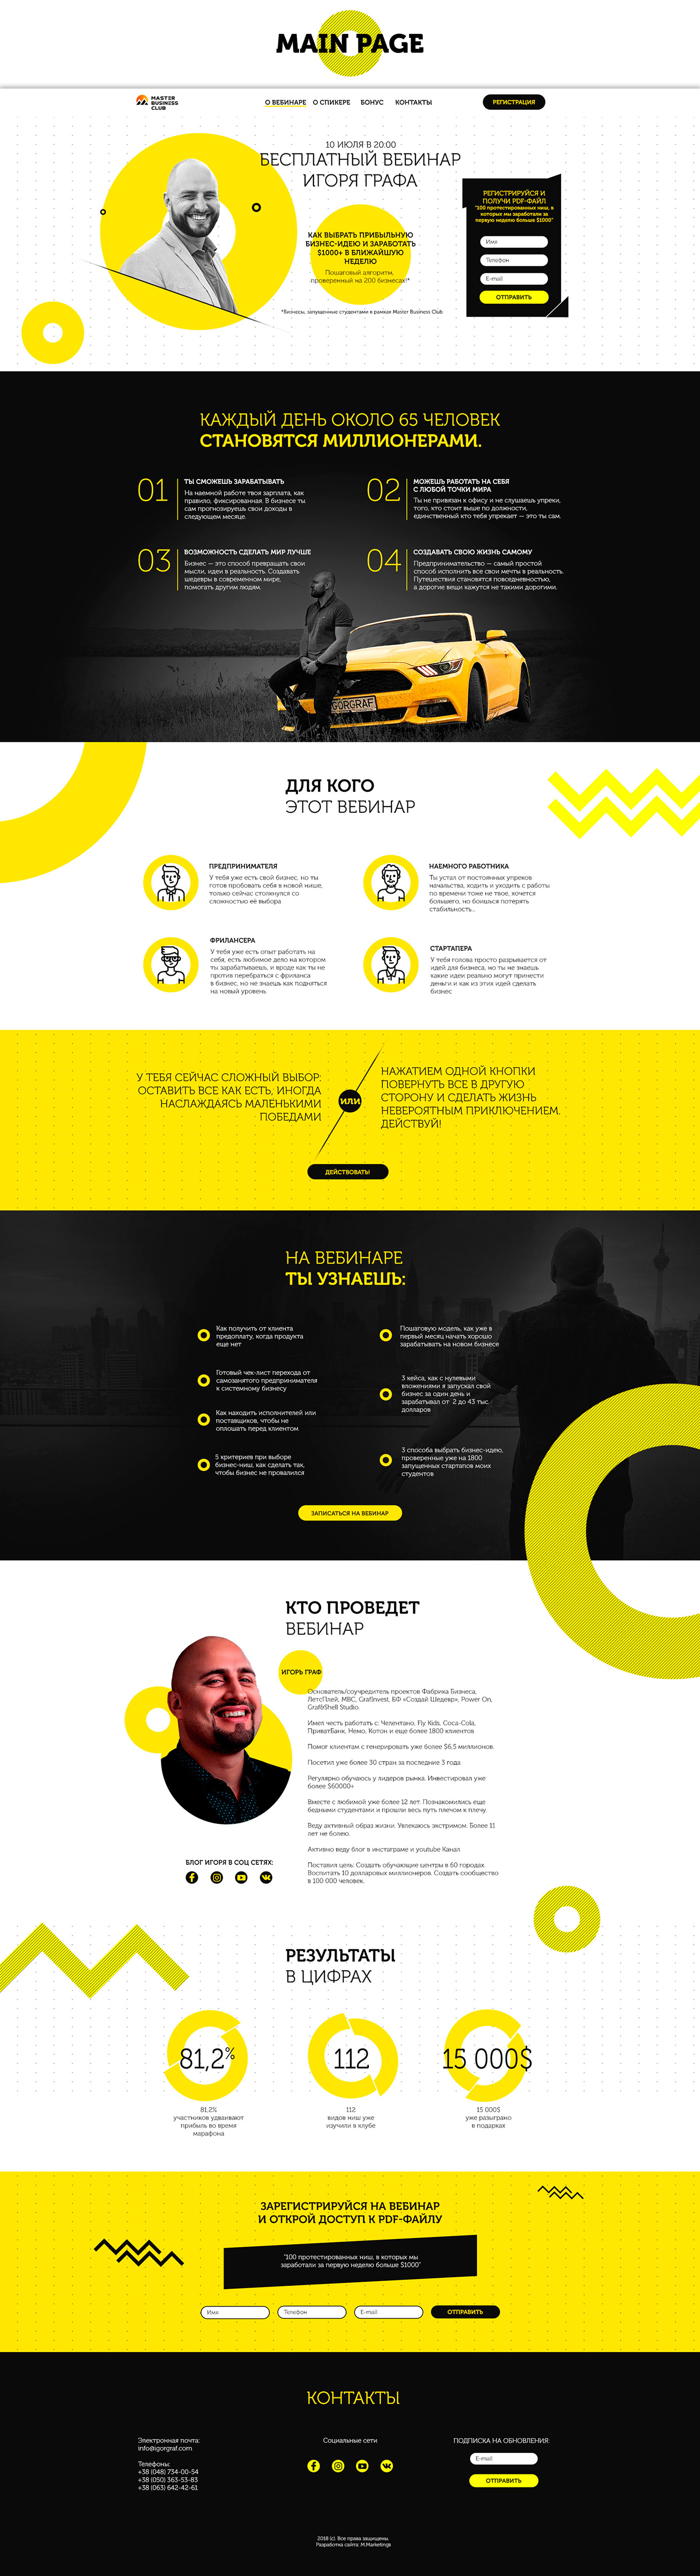 Web landing page business webinar yellow abstract